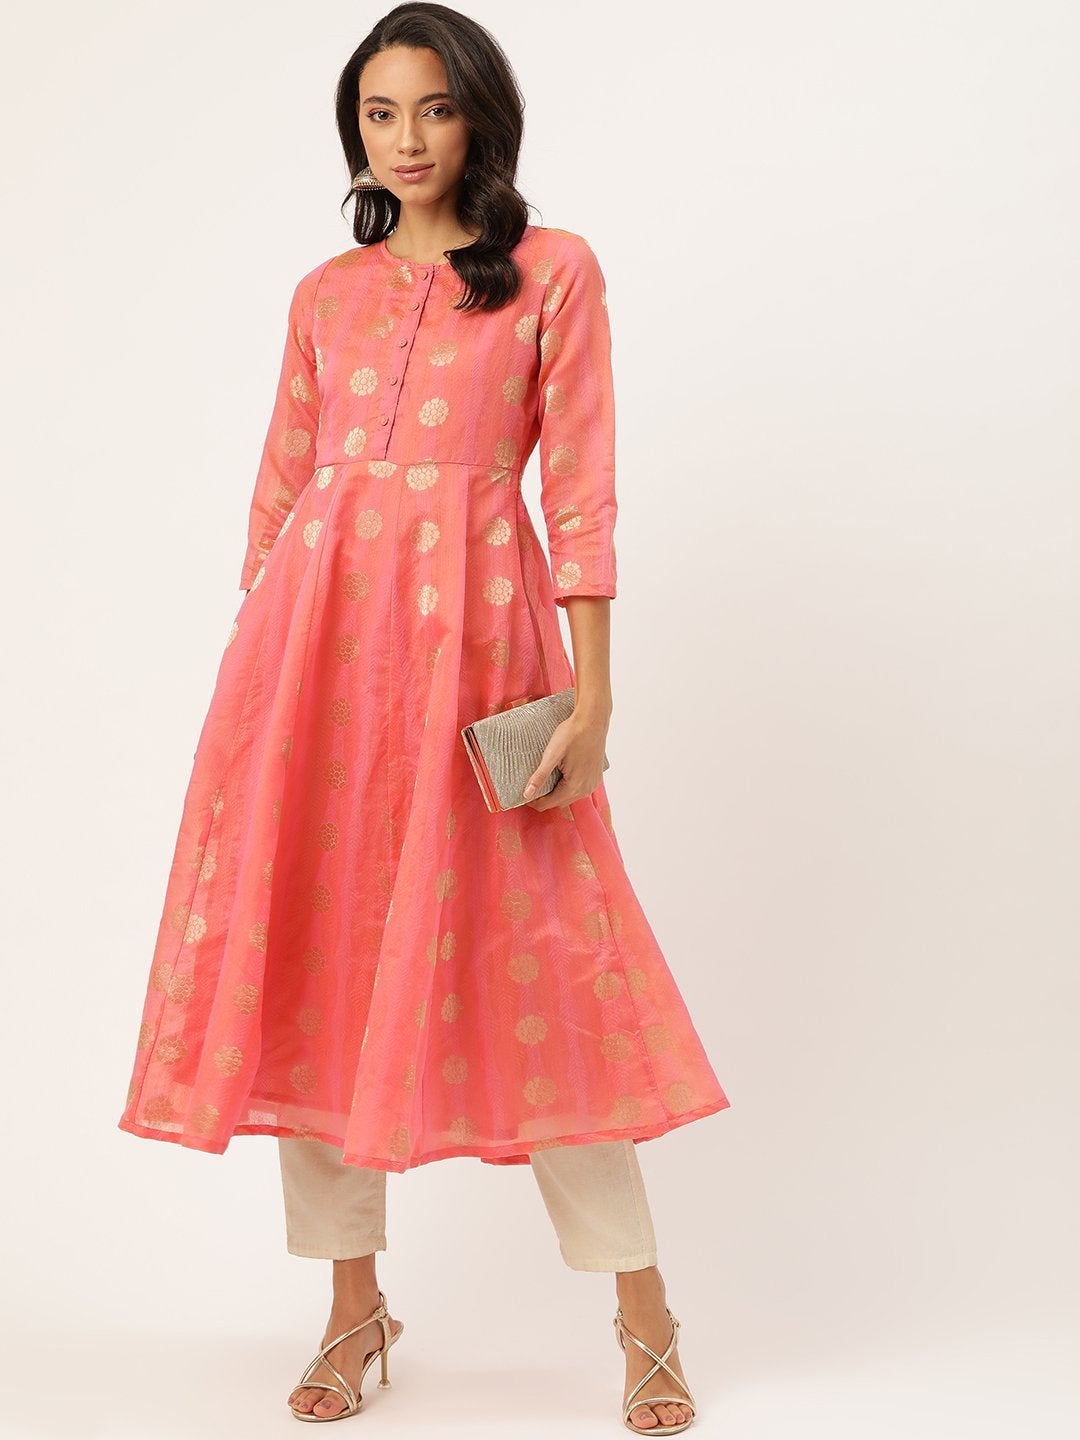 Women's Pink Chanderi Jacquard Anarkali Kurta - SHAE